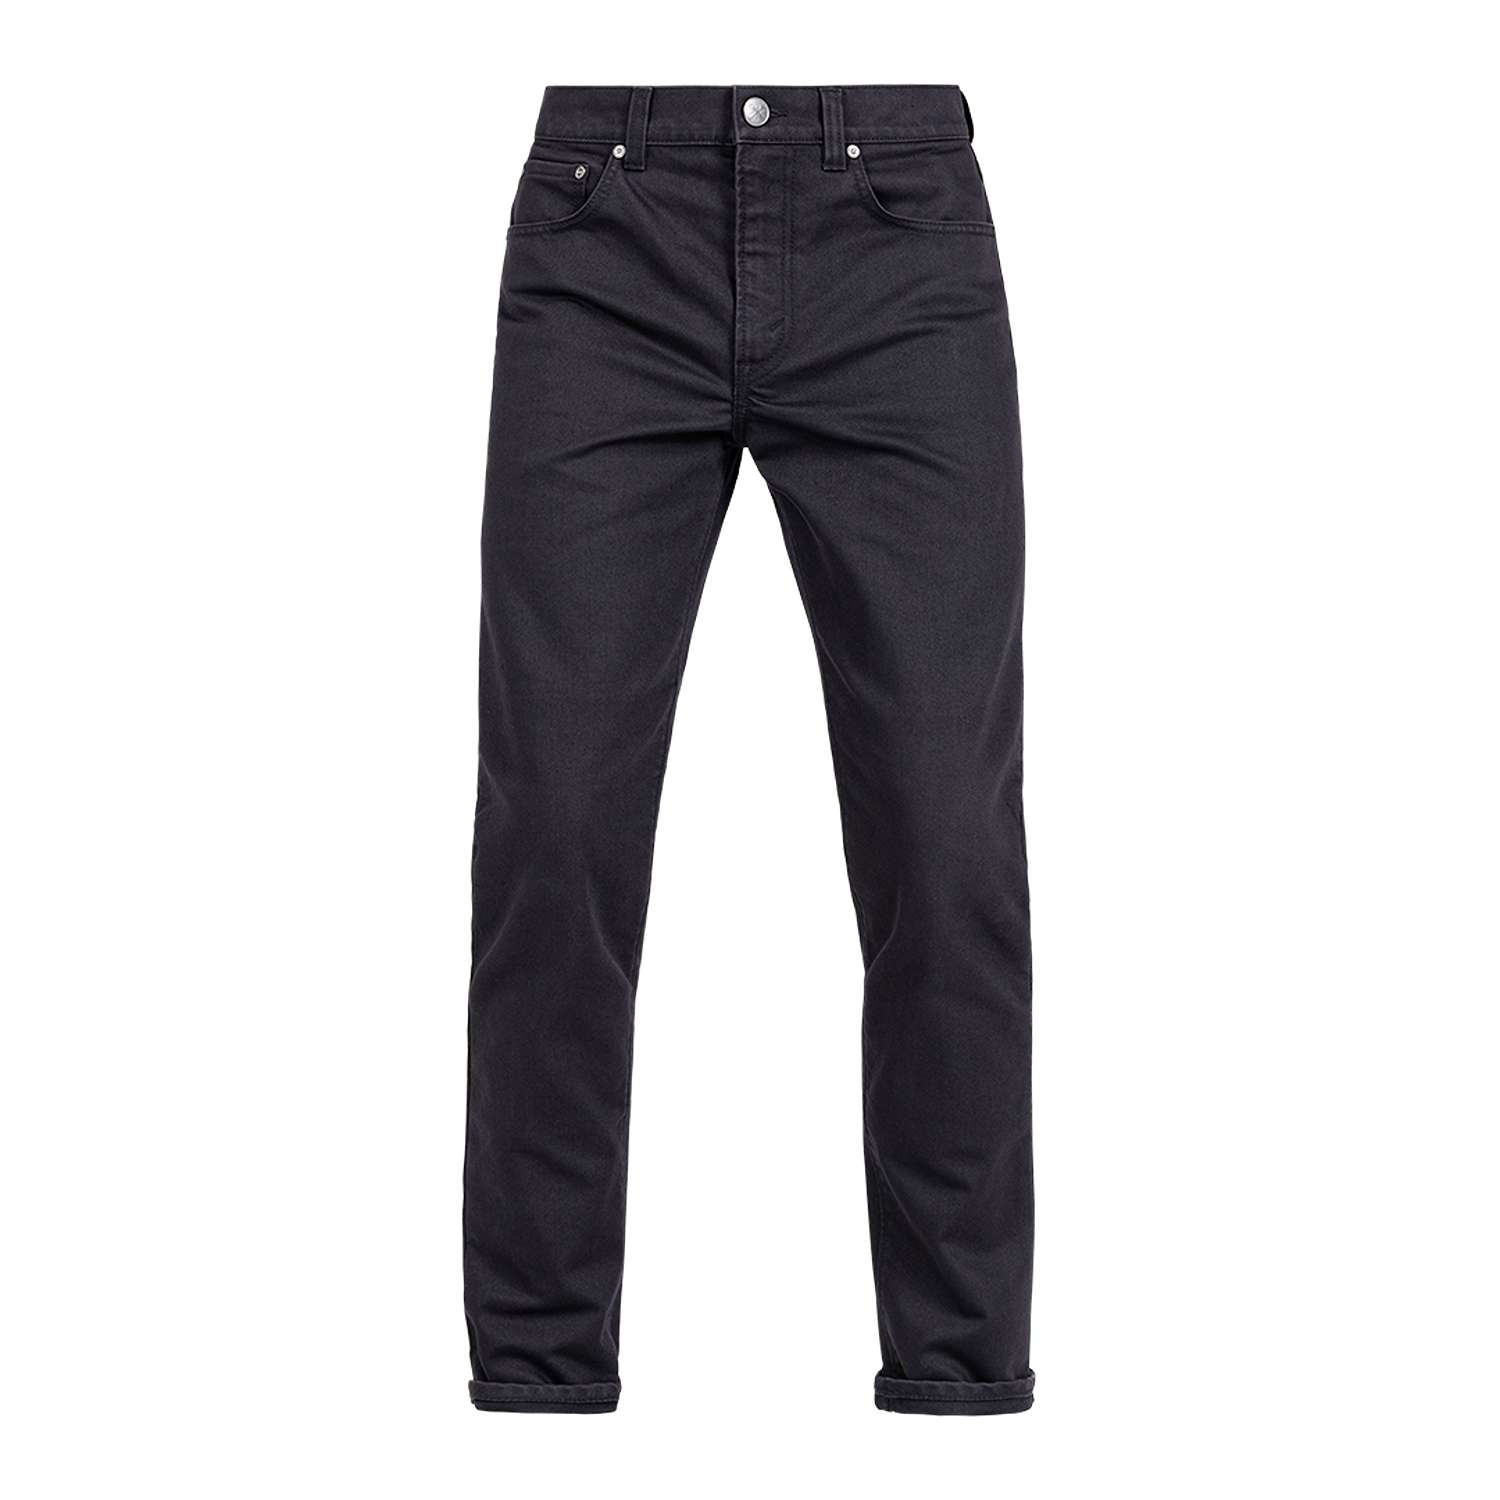 Image of John Doe Classic Tapered Jeans Black Size W34/L34 EN